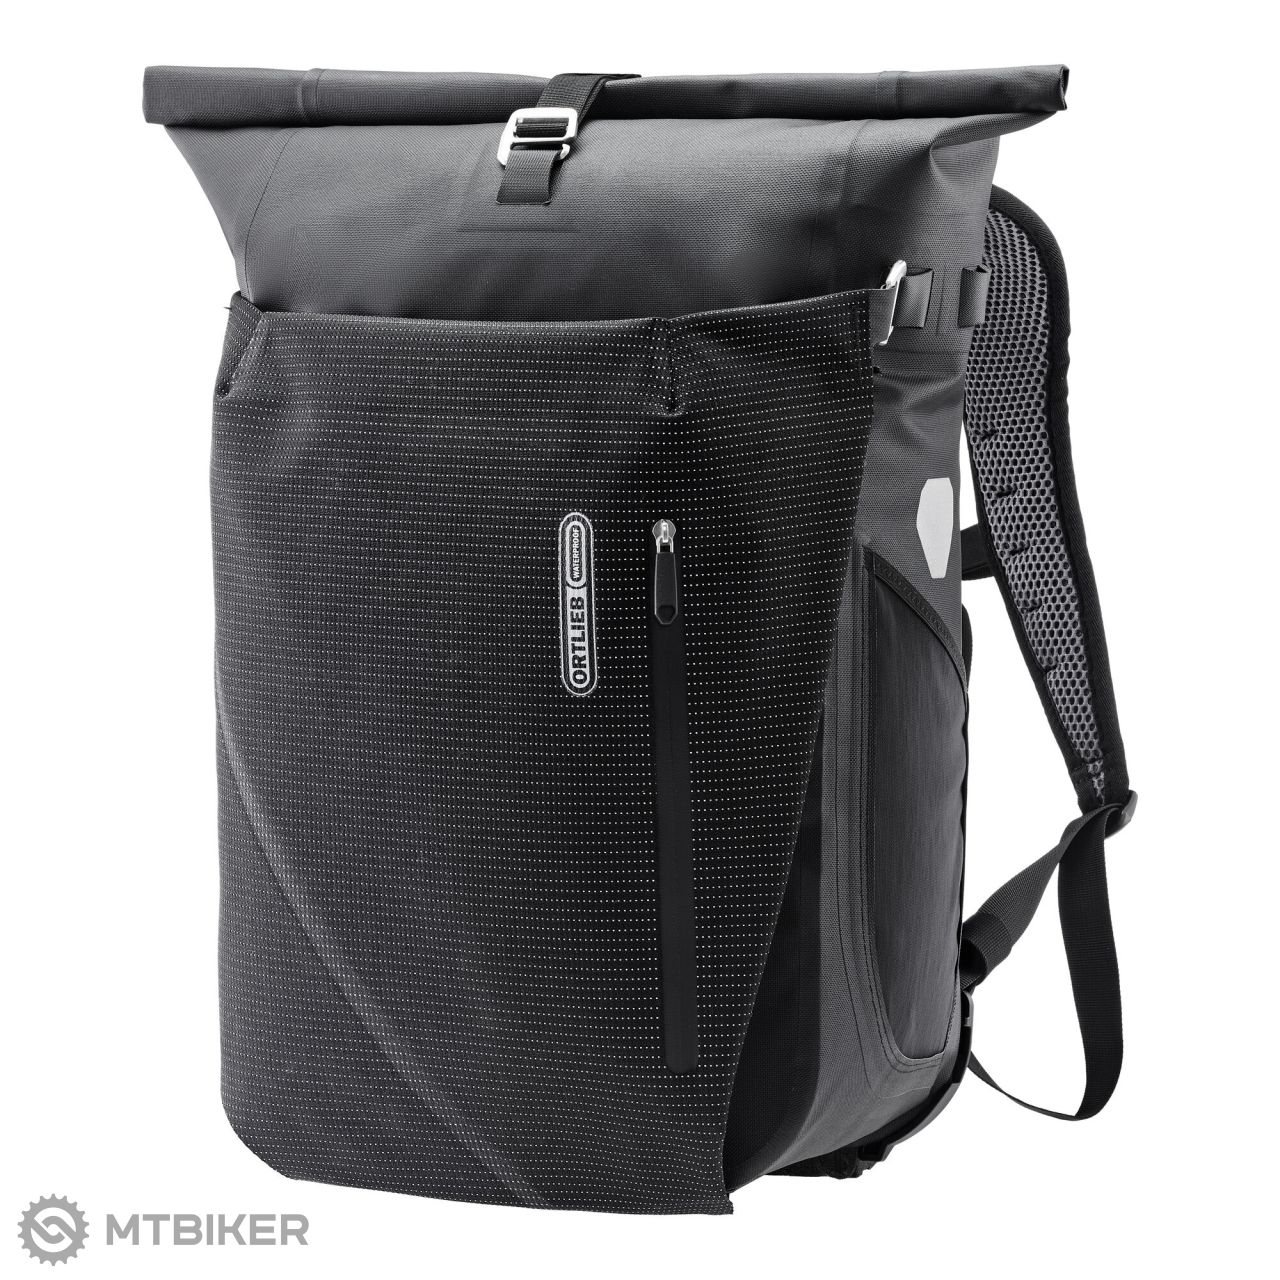 Ortlieb Vario PS High Visibility frame bag, 26 l, black - MTBIKER.shop